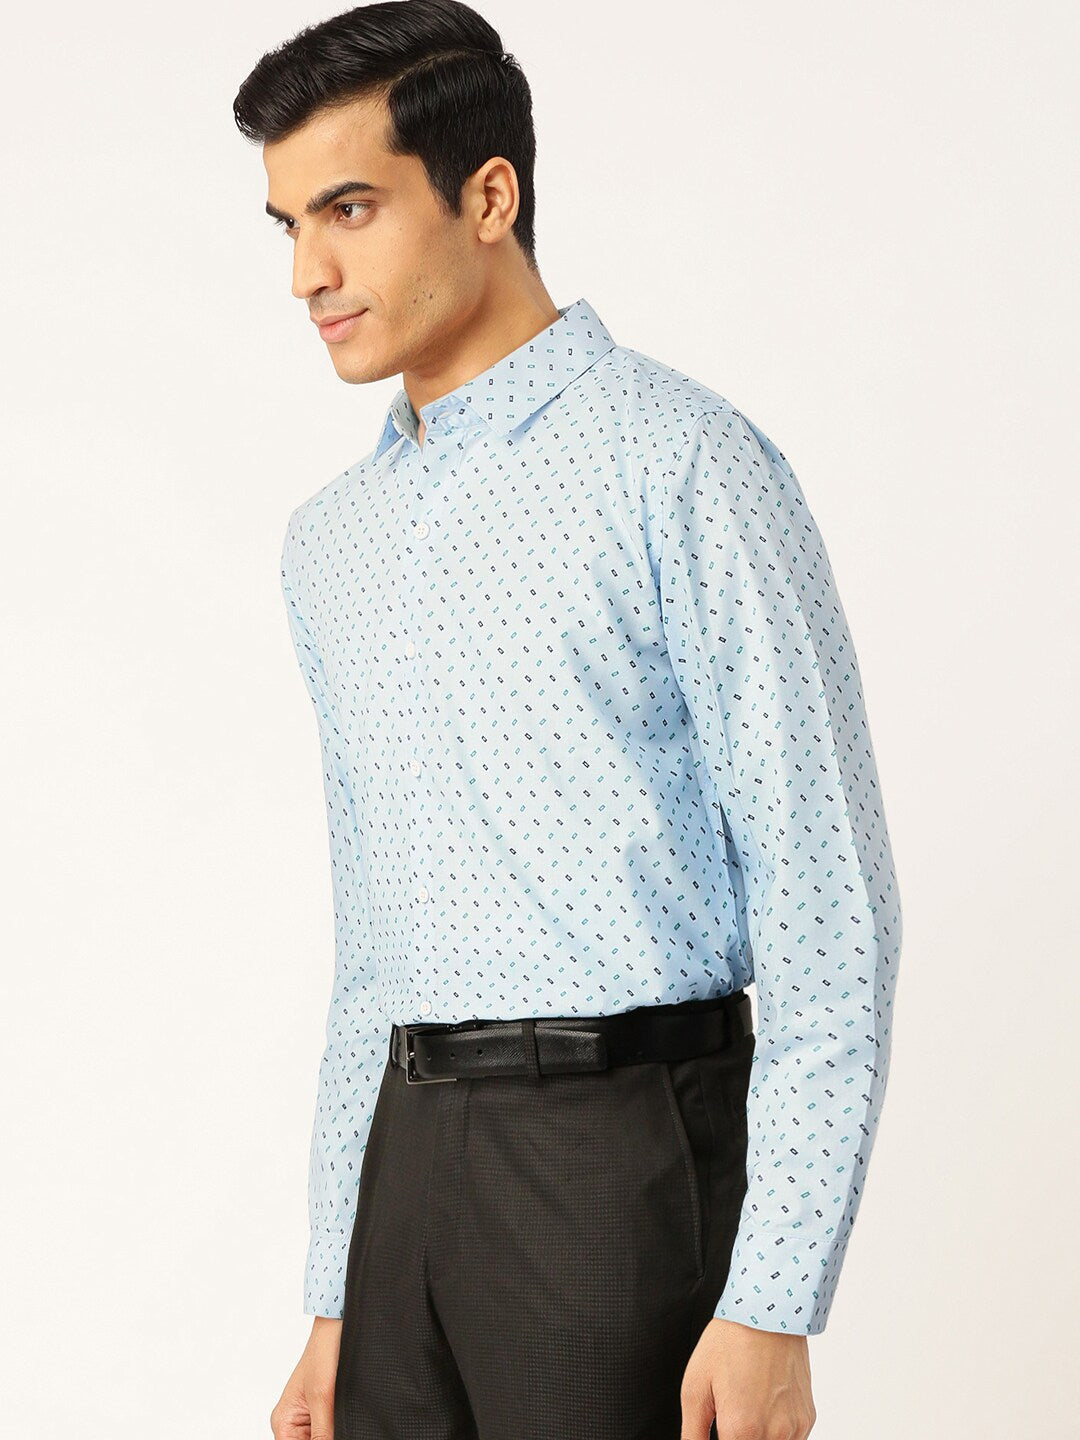 Men's Blue Cotton Printed Formal Shirts ( SF 716Sky ) - Jainish